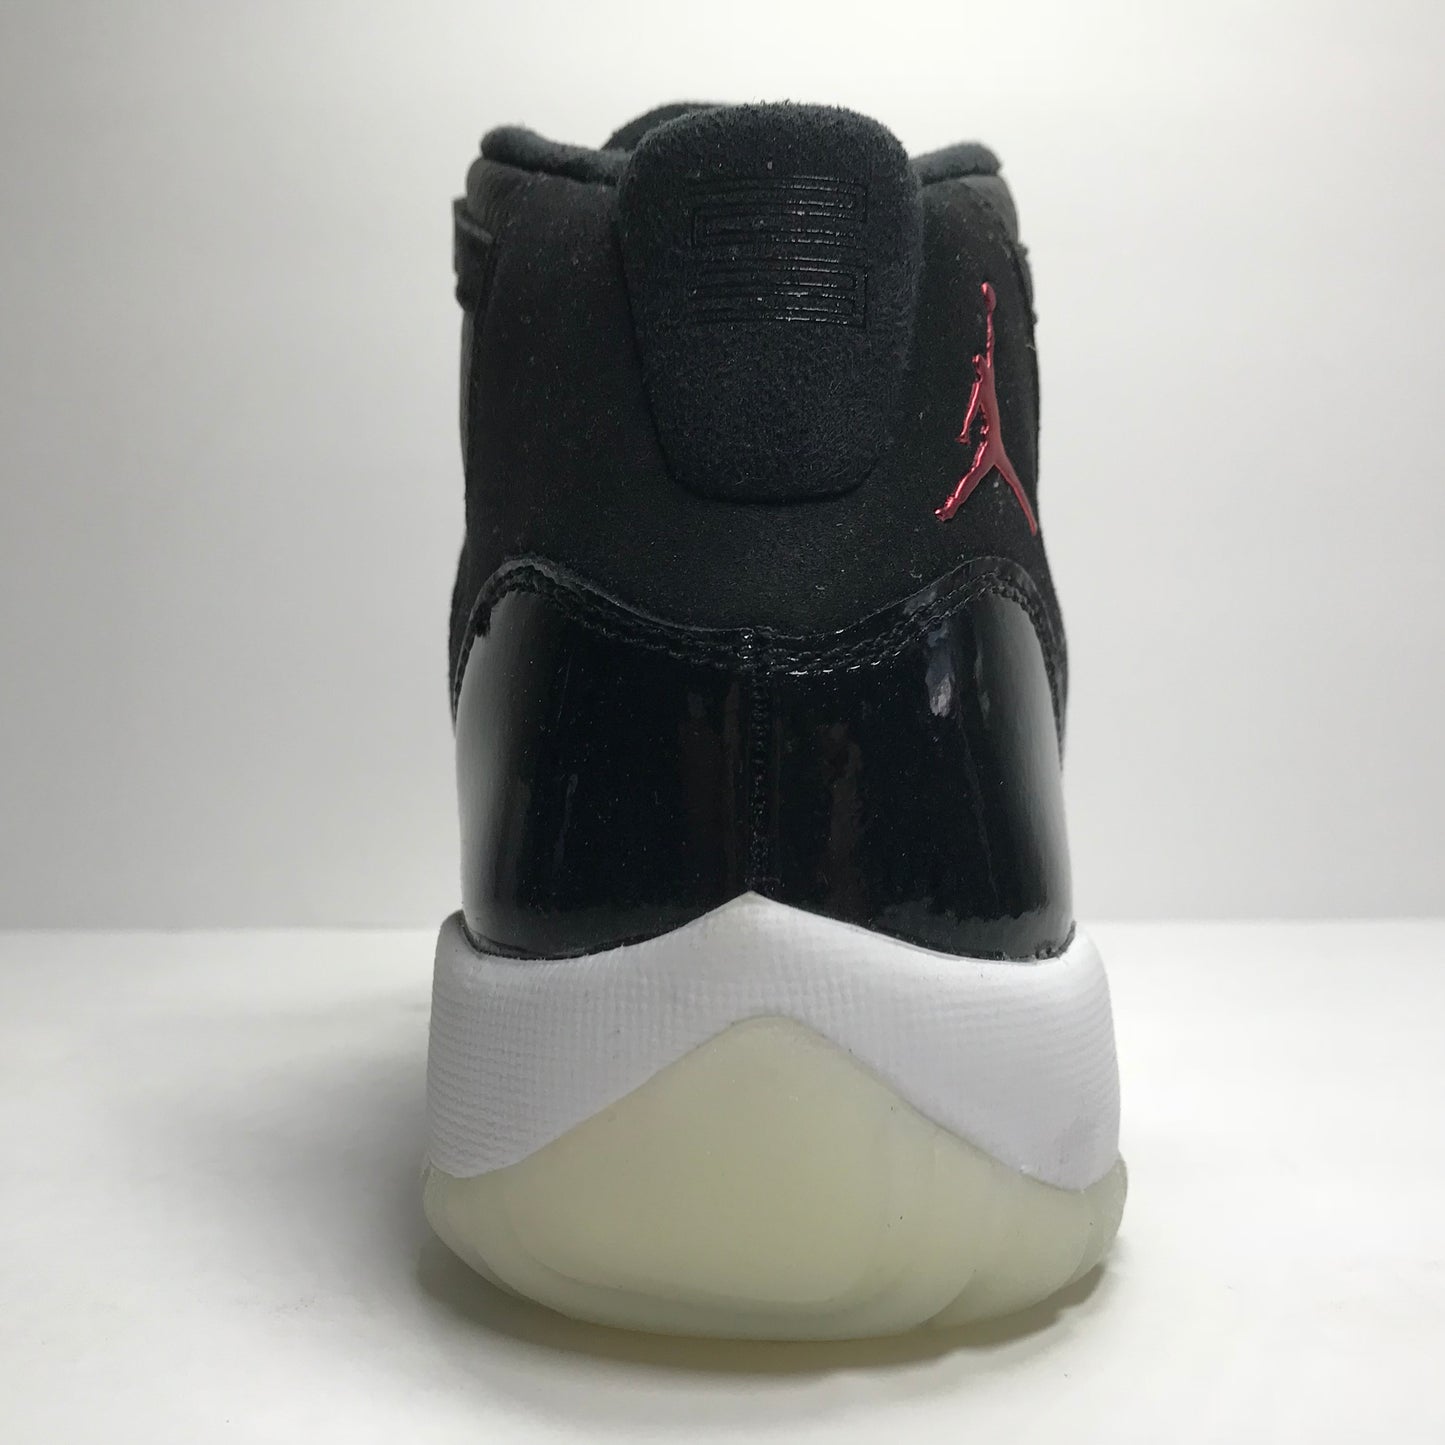 DS Nike Air Jordan 11 XI Retro BG 72-10 Taille 7Y